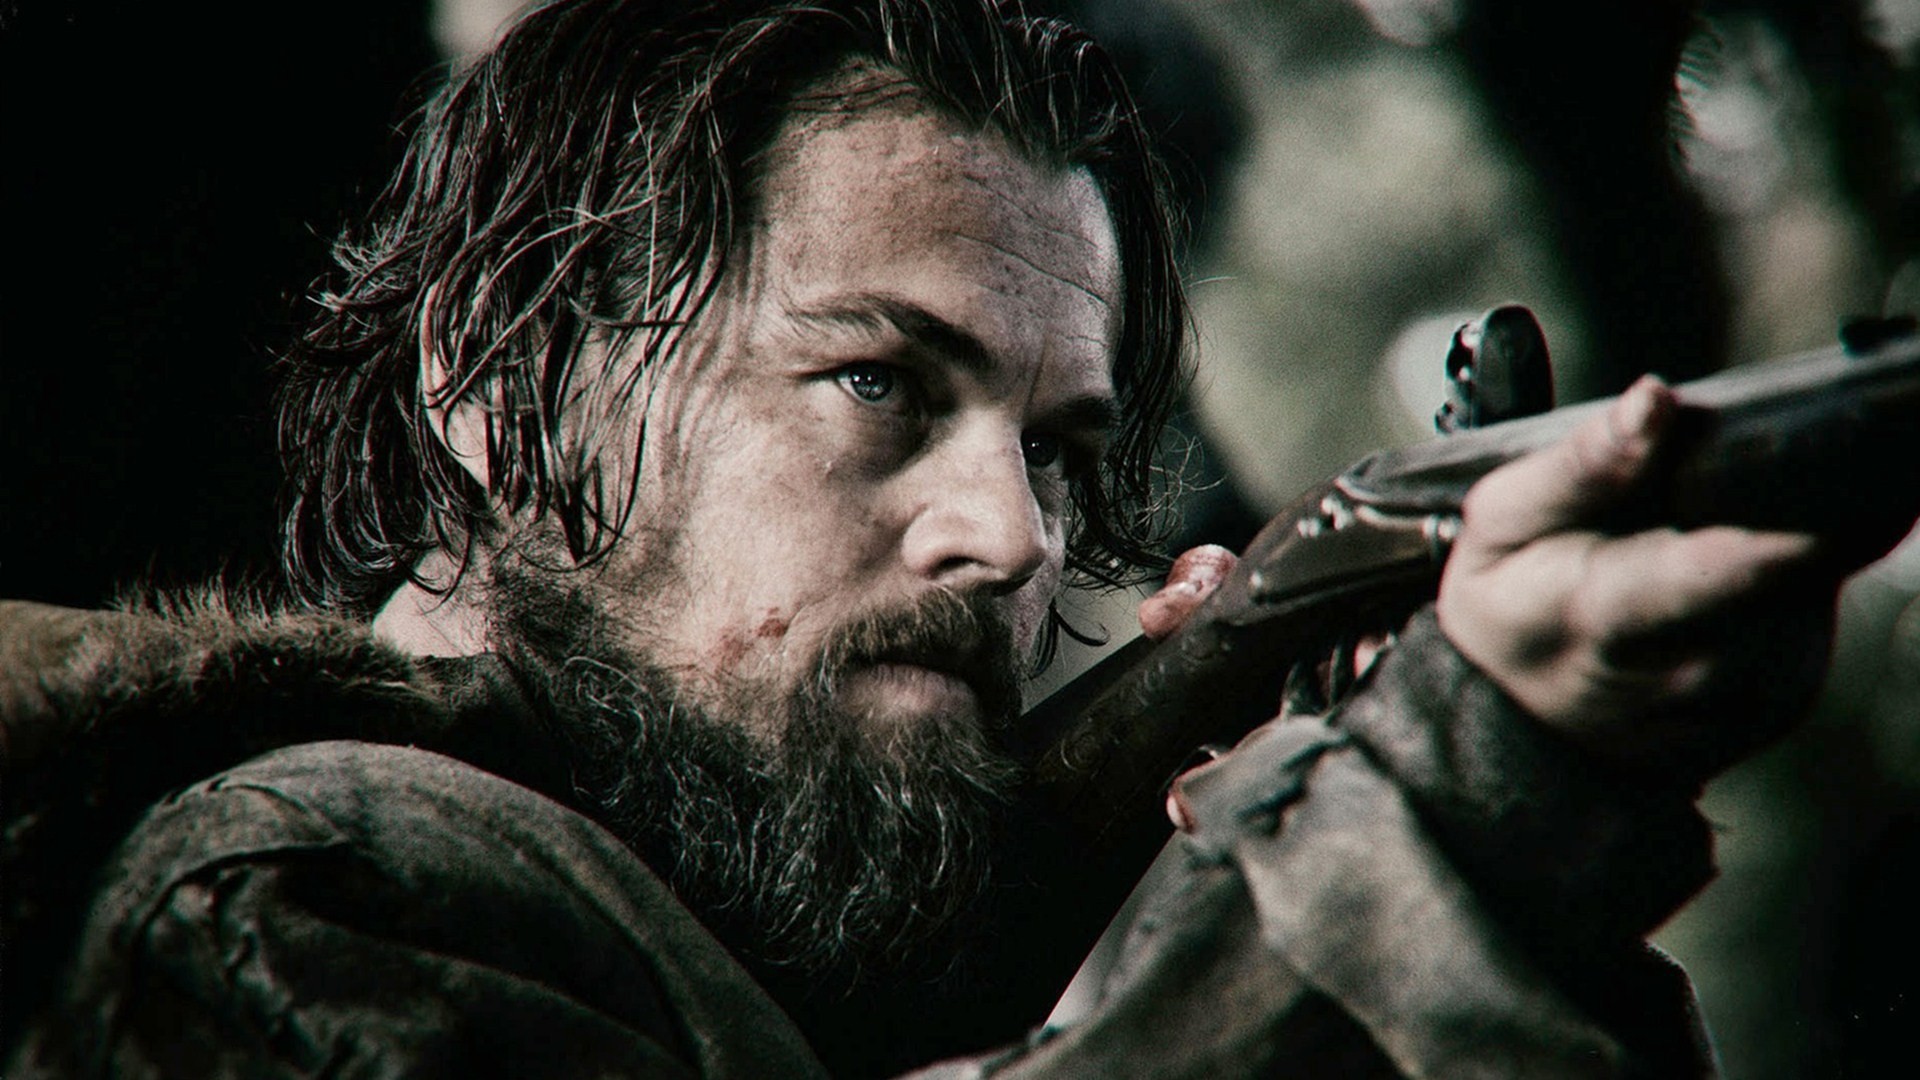 People 1920x1080 movies The Revenant Leonardo DiCaprio film stills beard men actor rifles aiming weapon